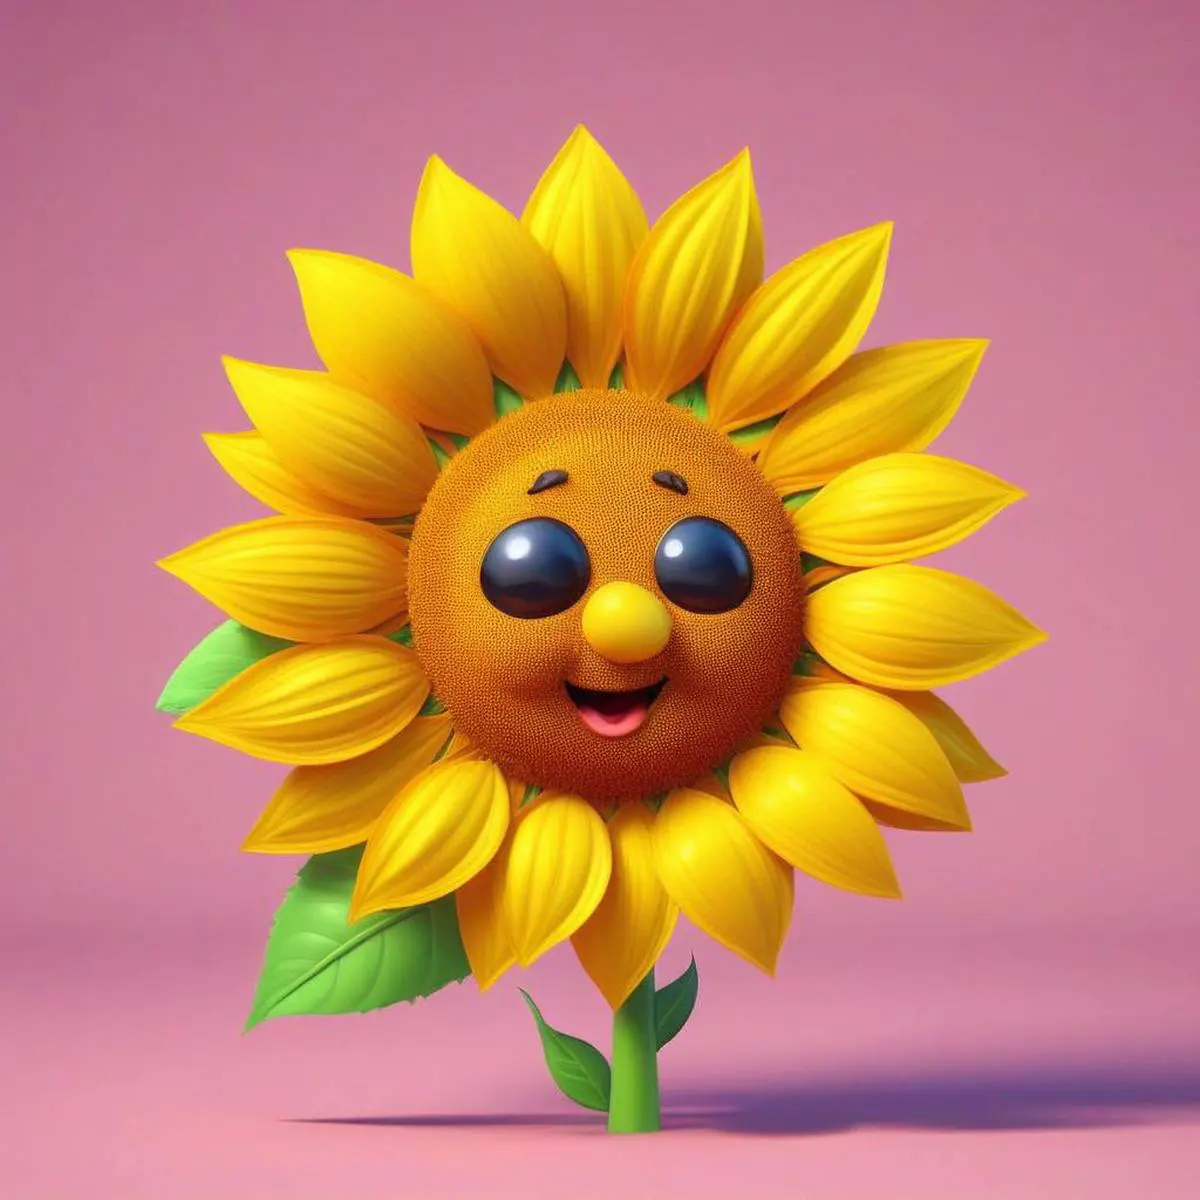 Sunflower puns